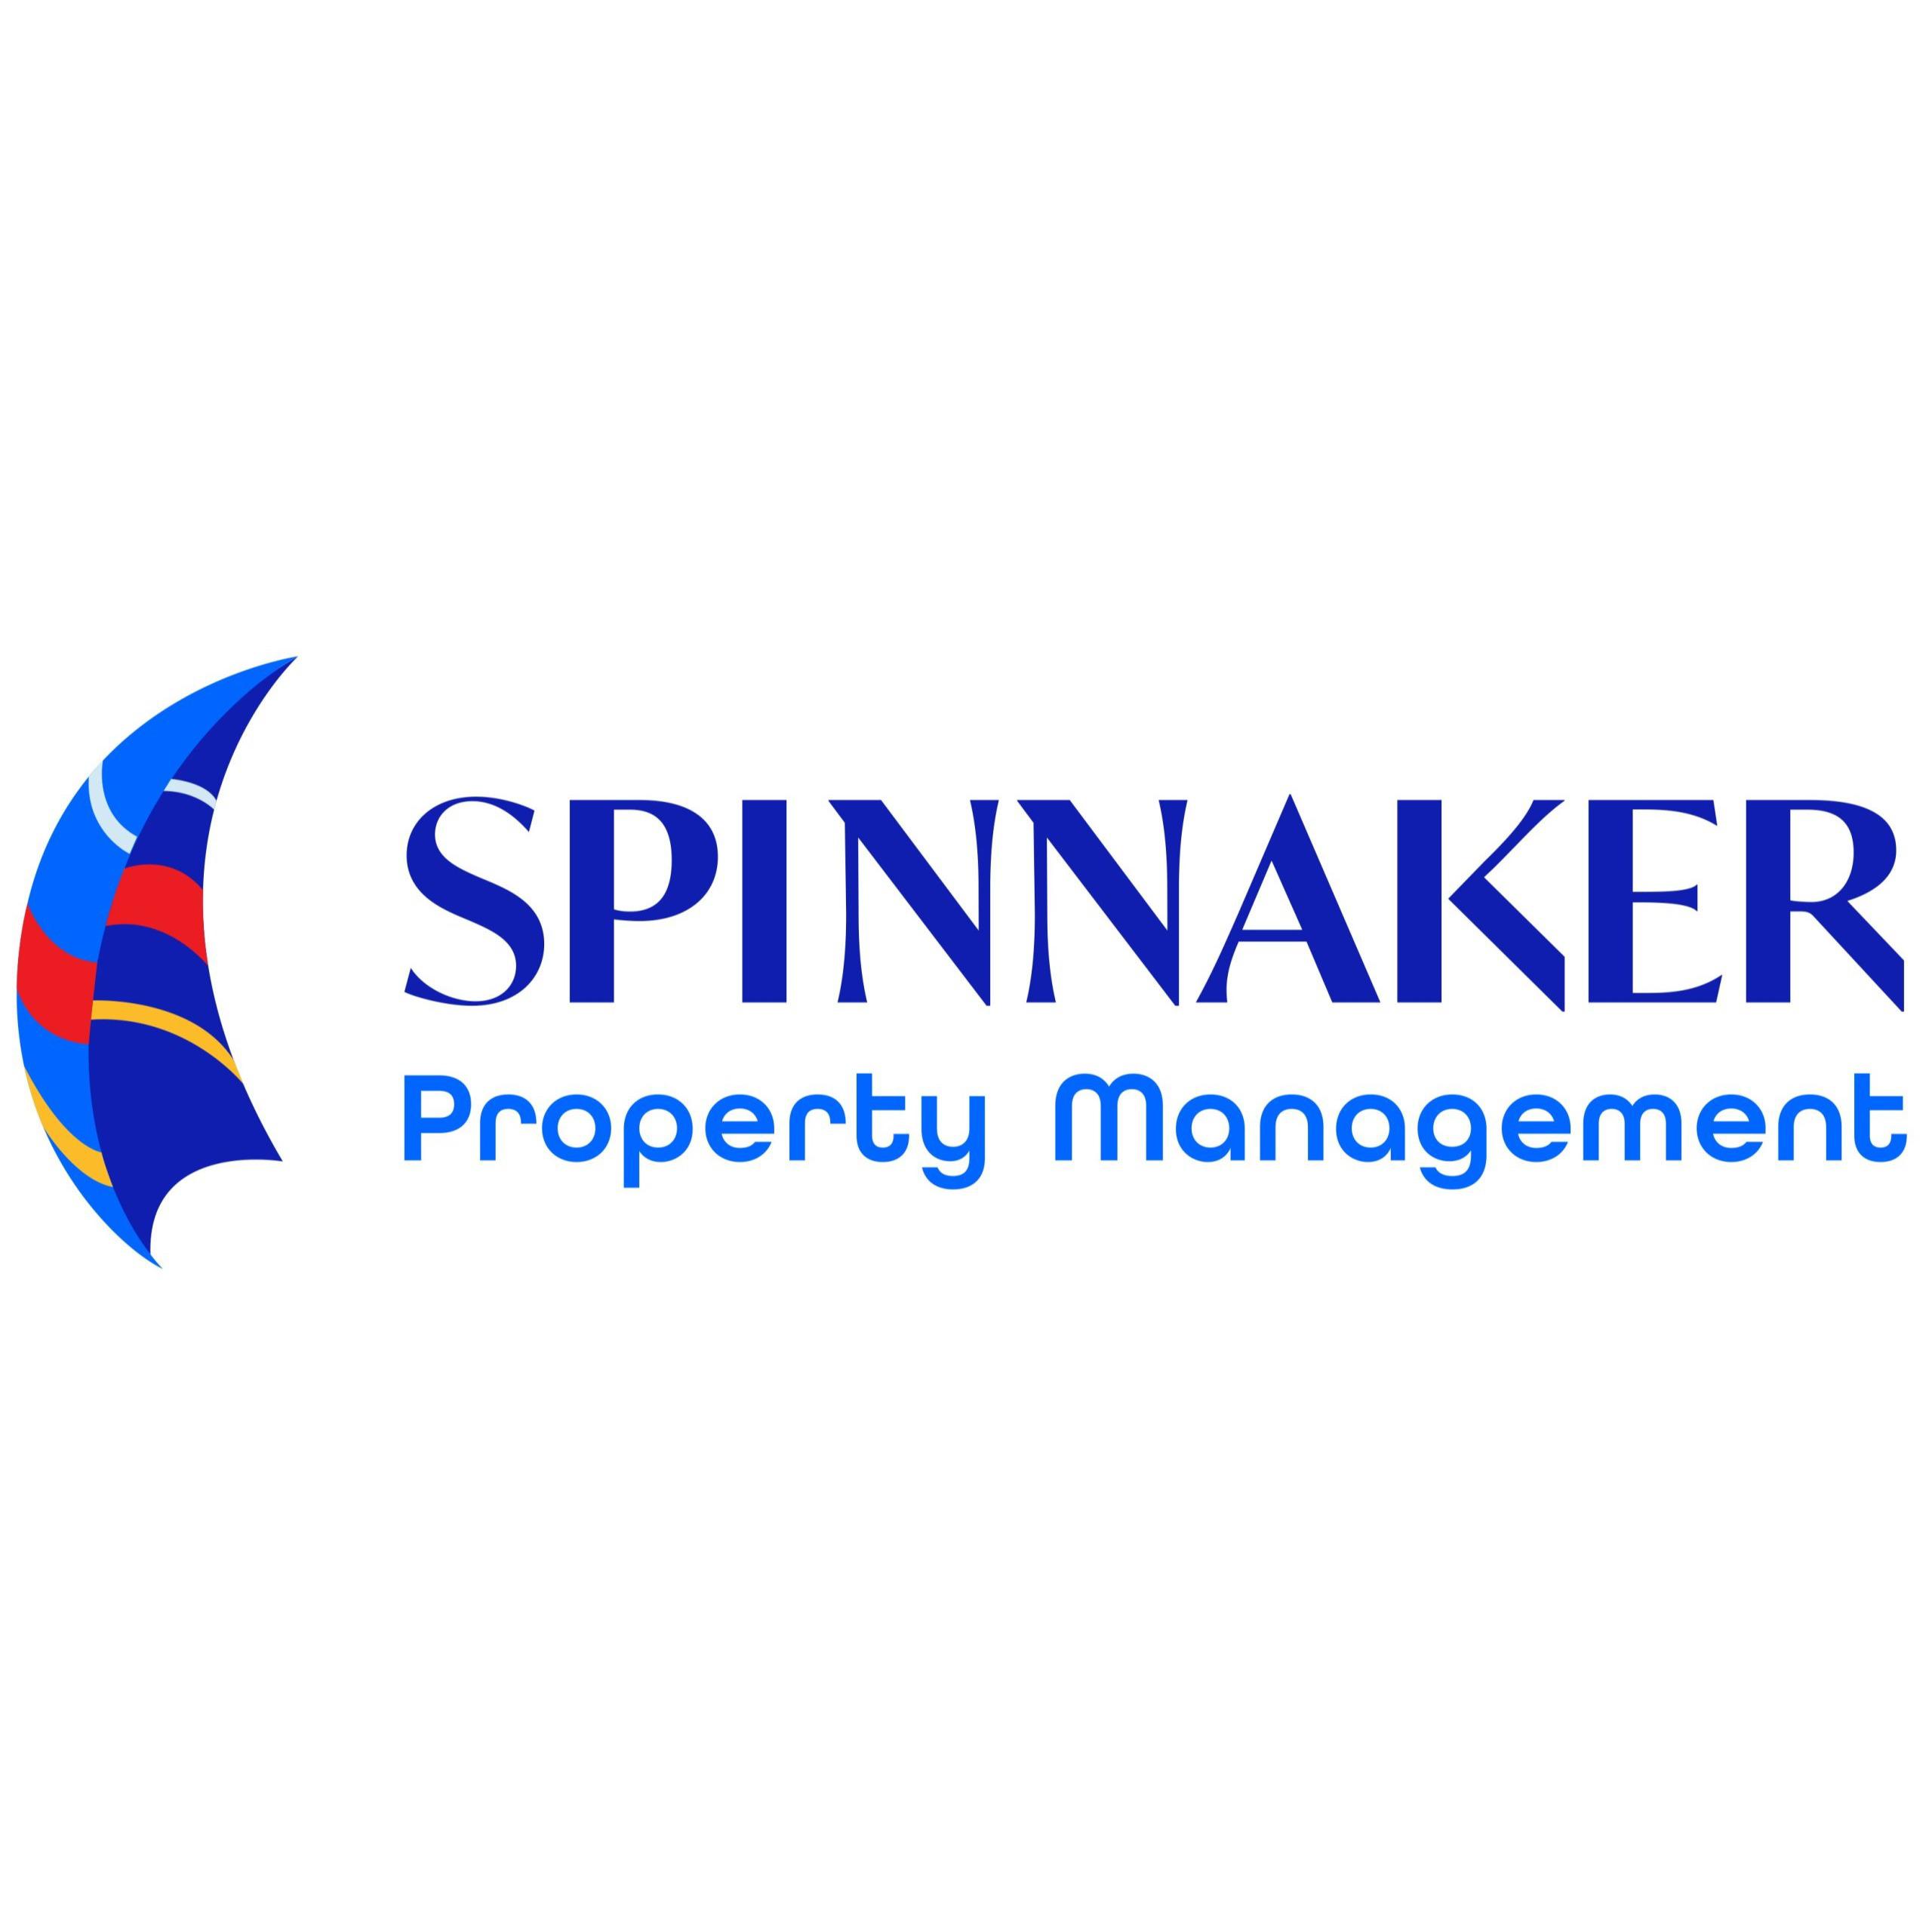 Spinnaker Property Management - Tacoma, WA 98409 - (253)830-5160 | ShowMeLocal.com